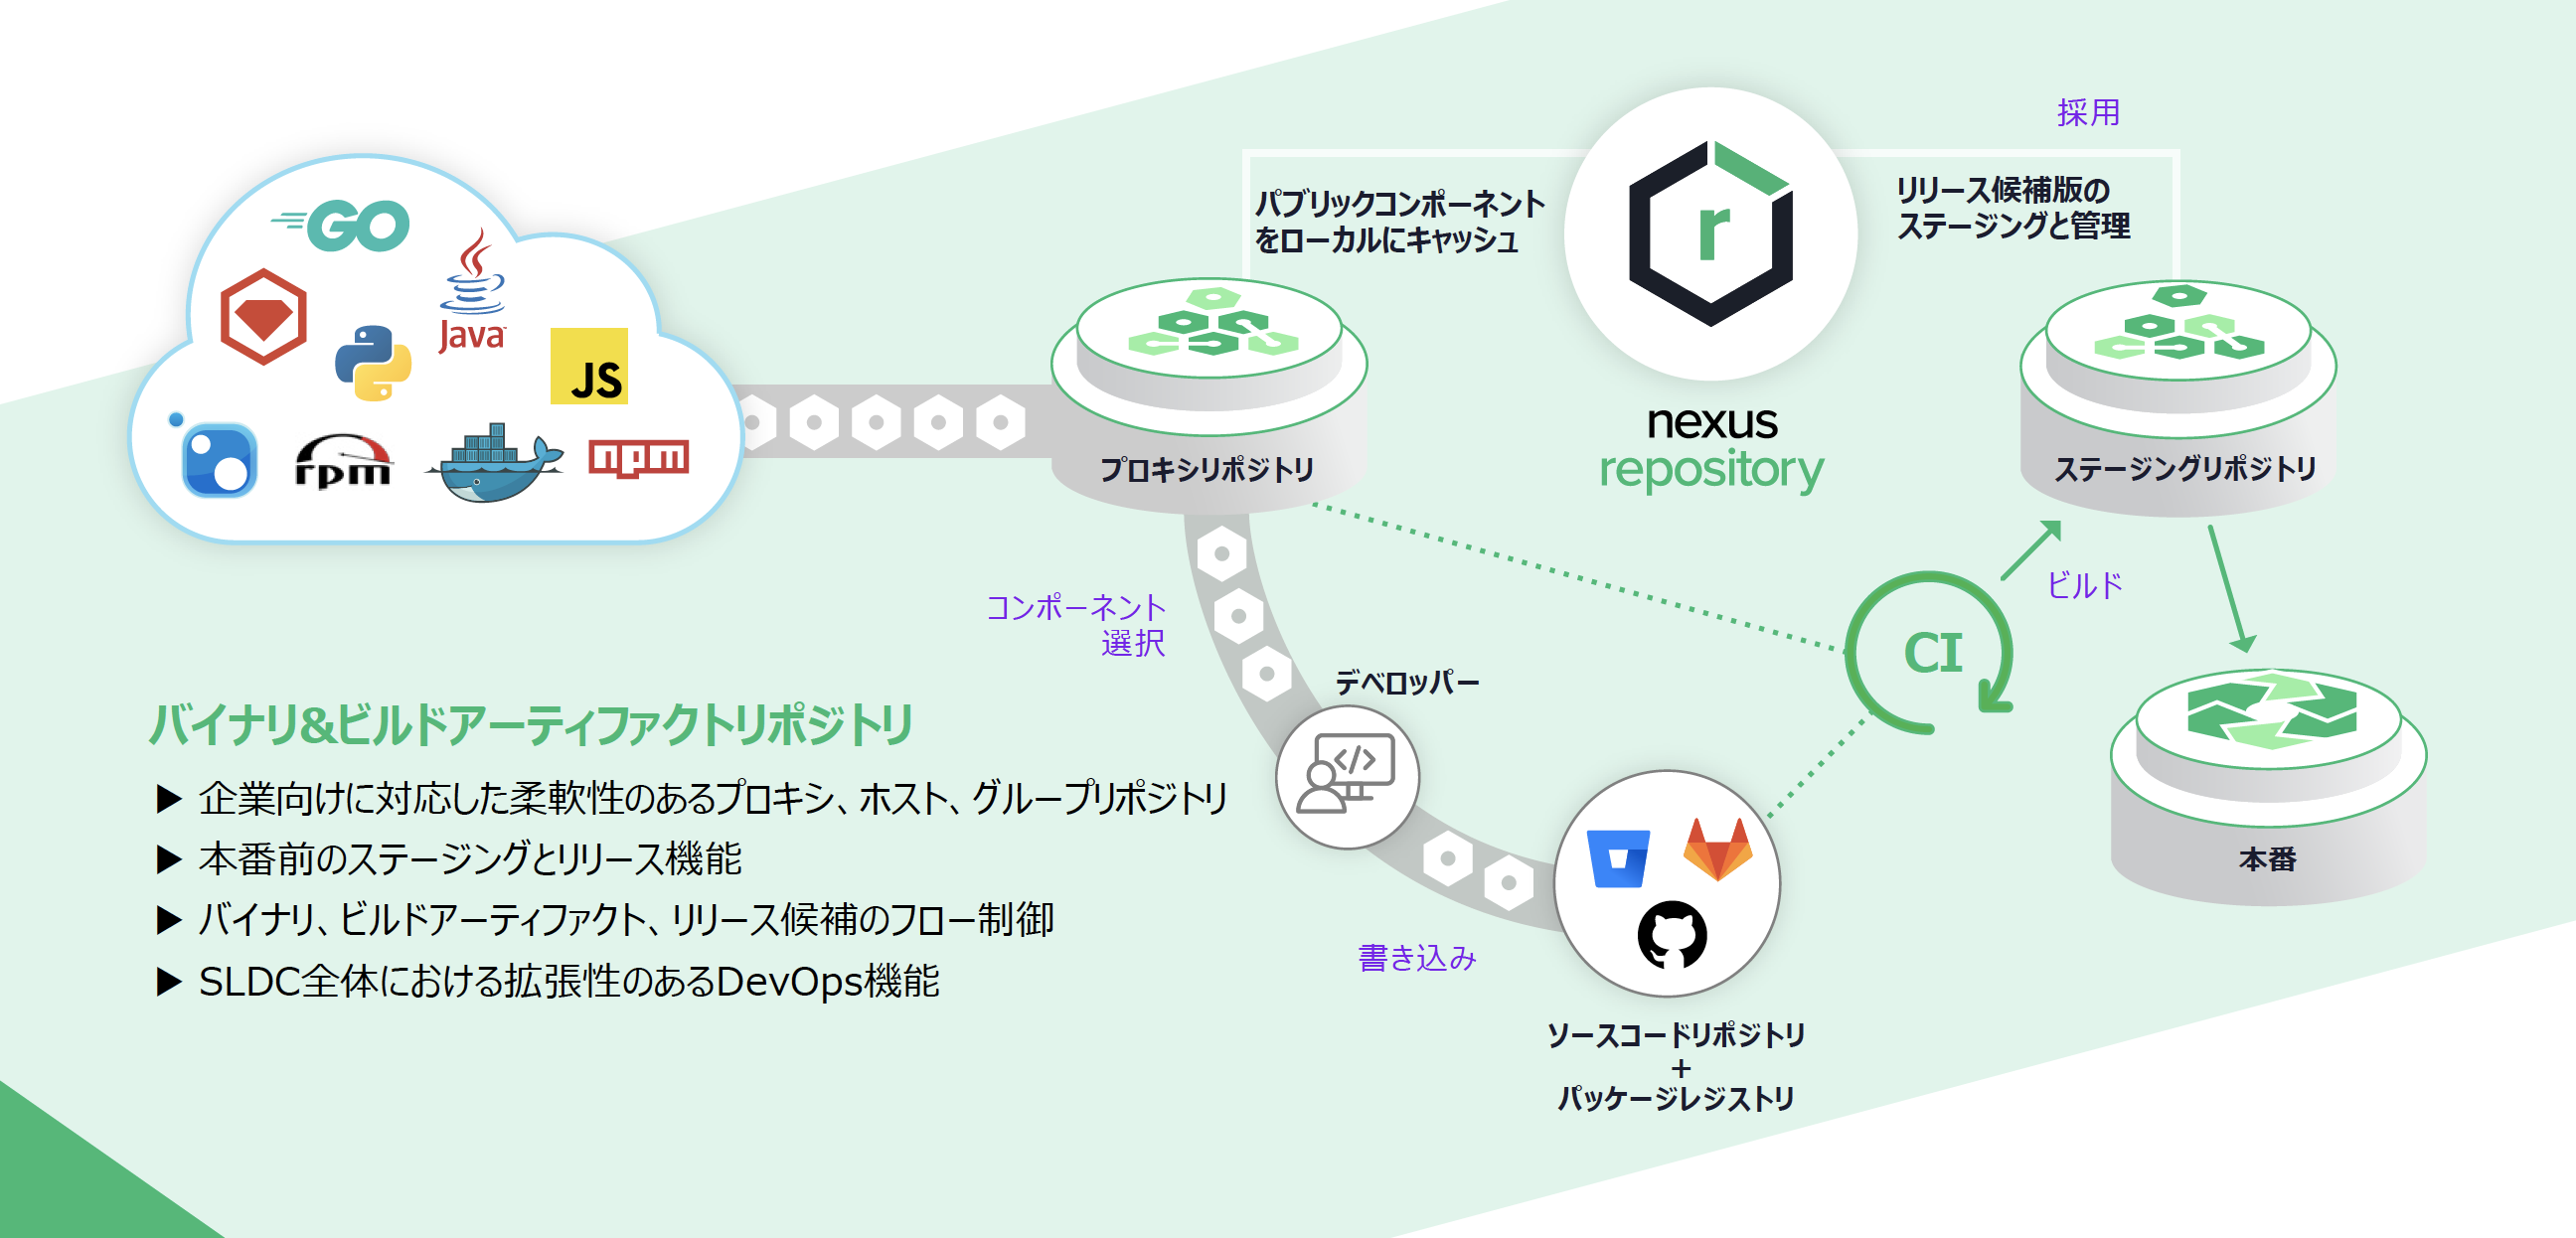 nexus-repository-pro-devsamurai-partner-01.png